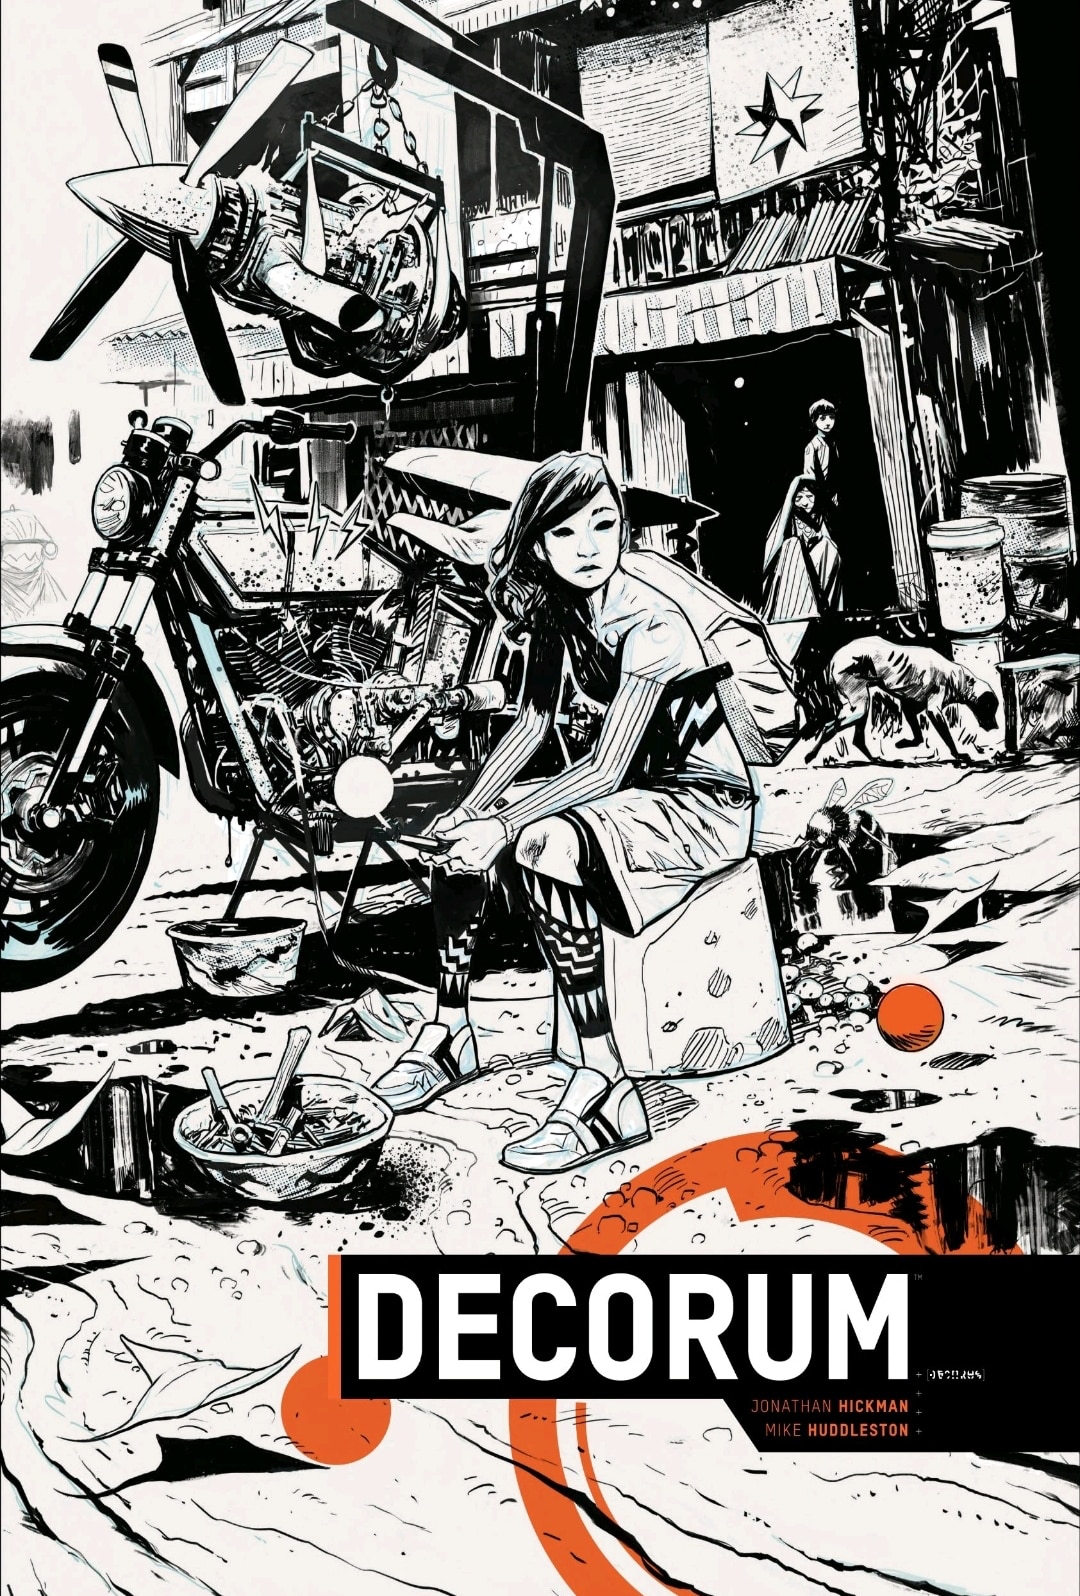 COMIC-REVIEW: DECORUM